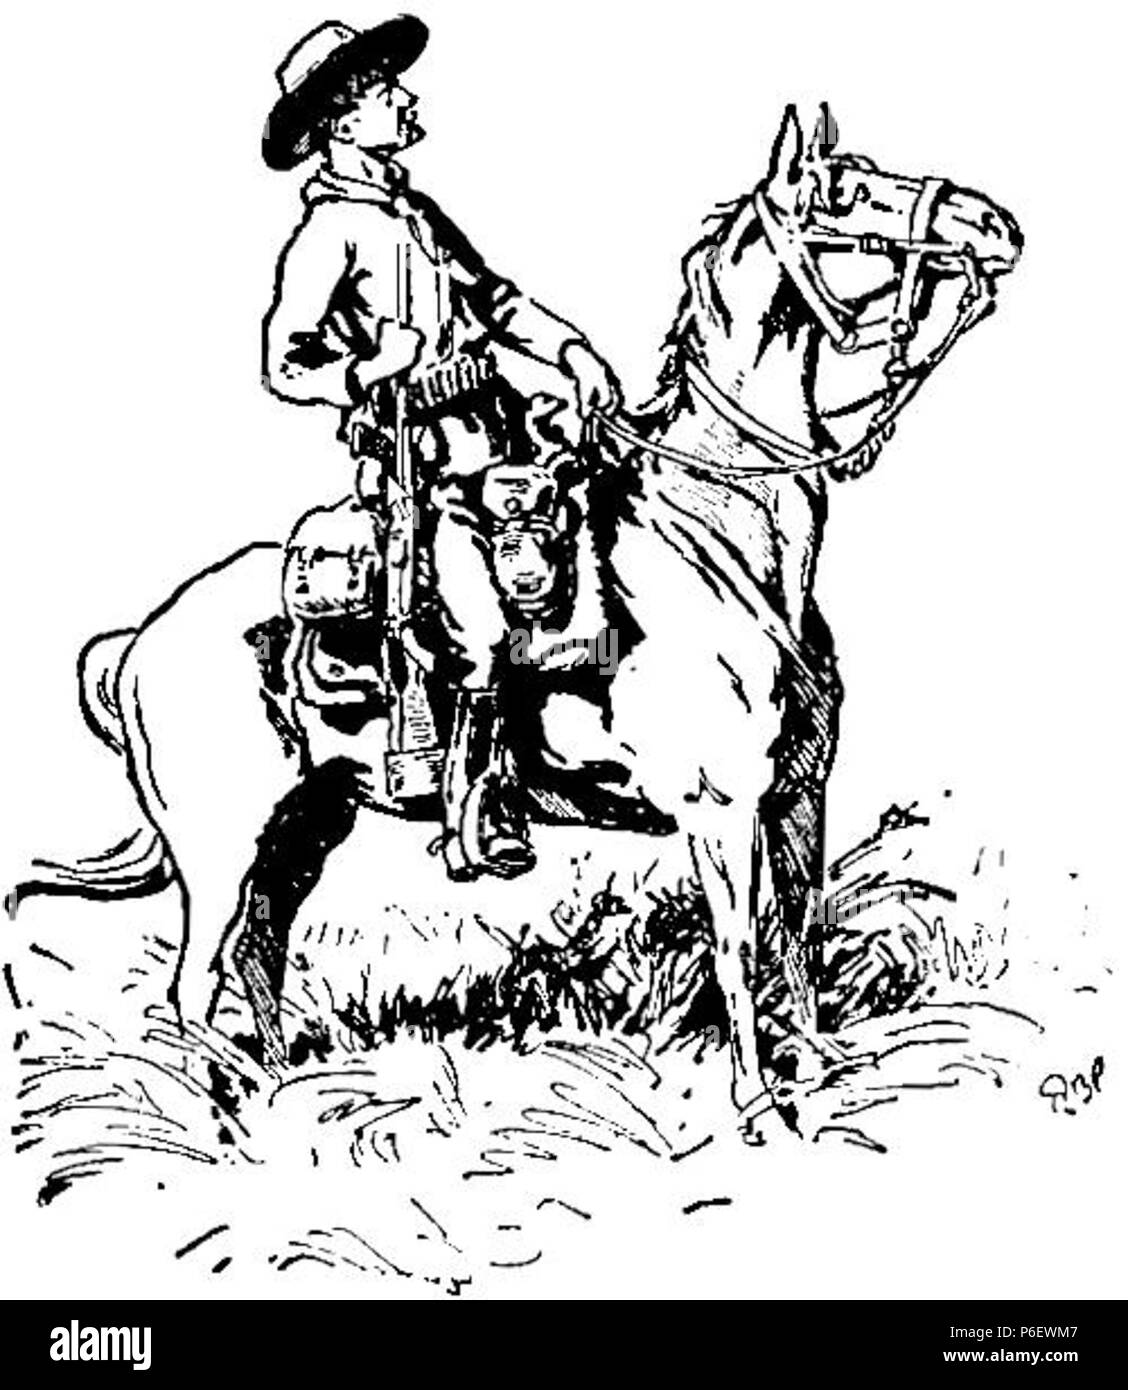 Anglais : Robert Baden-Powell's Sketch du chef de Scouts Frederick Russell Burnham, Matopos Hills, la Rhodésie, 1896. 18969 Burnham sketch par Baden-Powell Banque D'Images